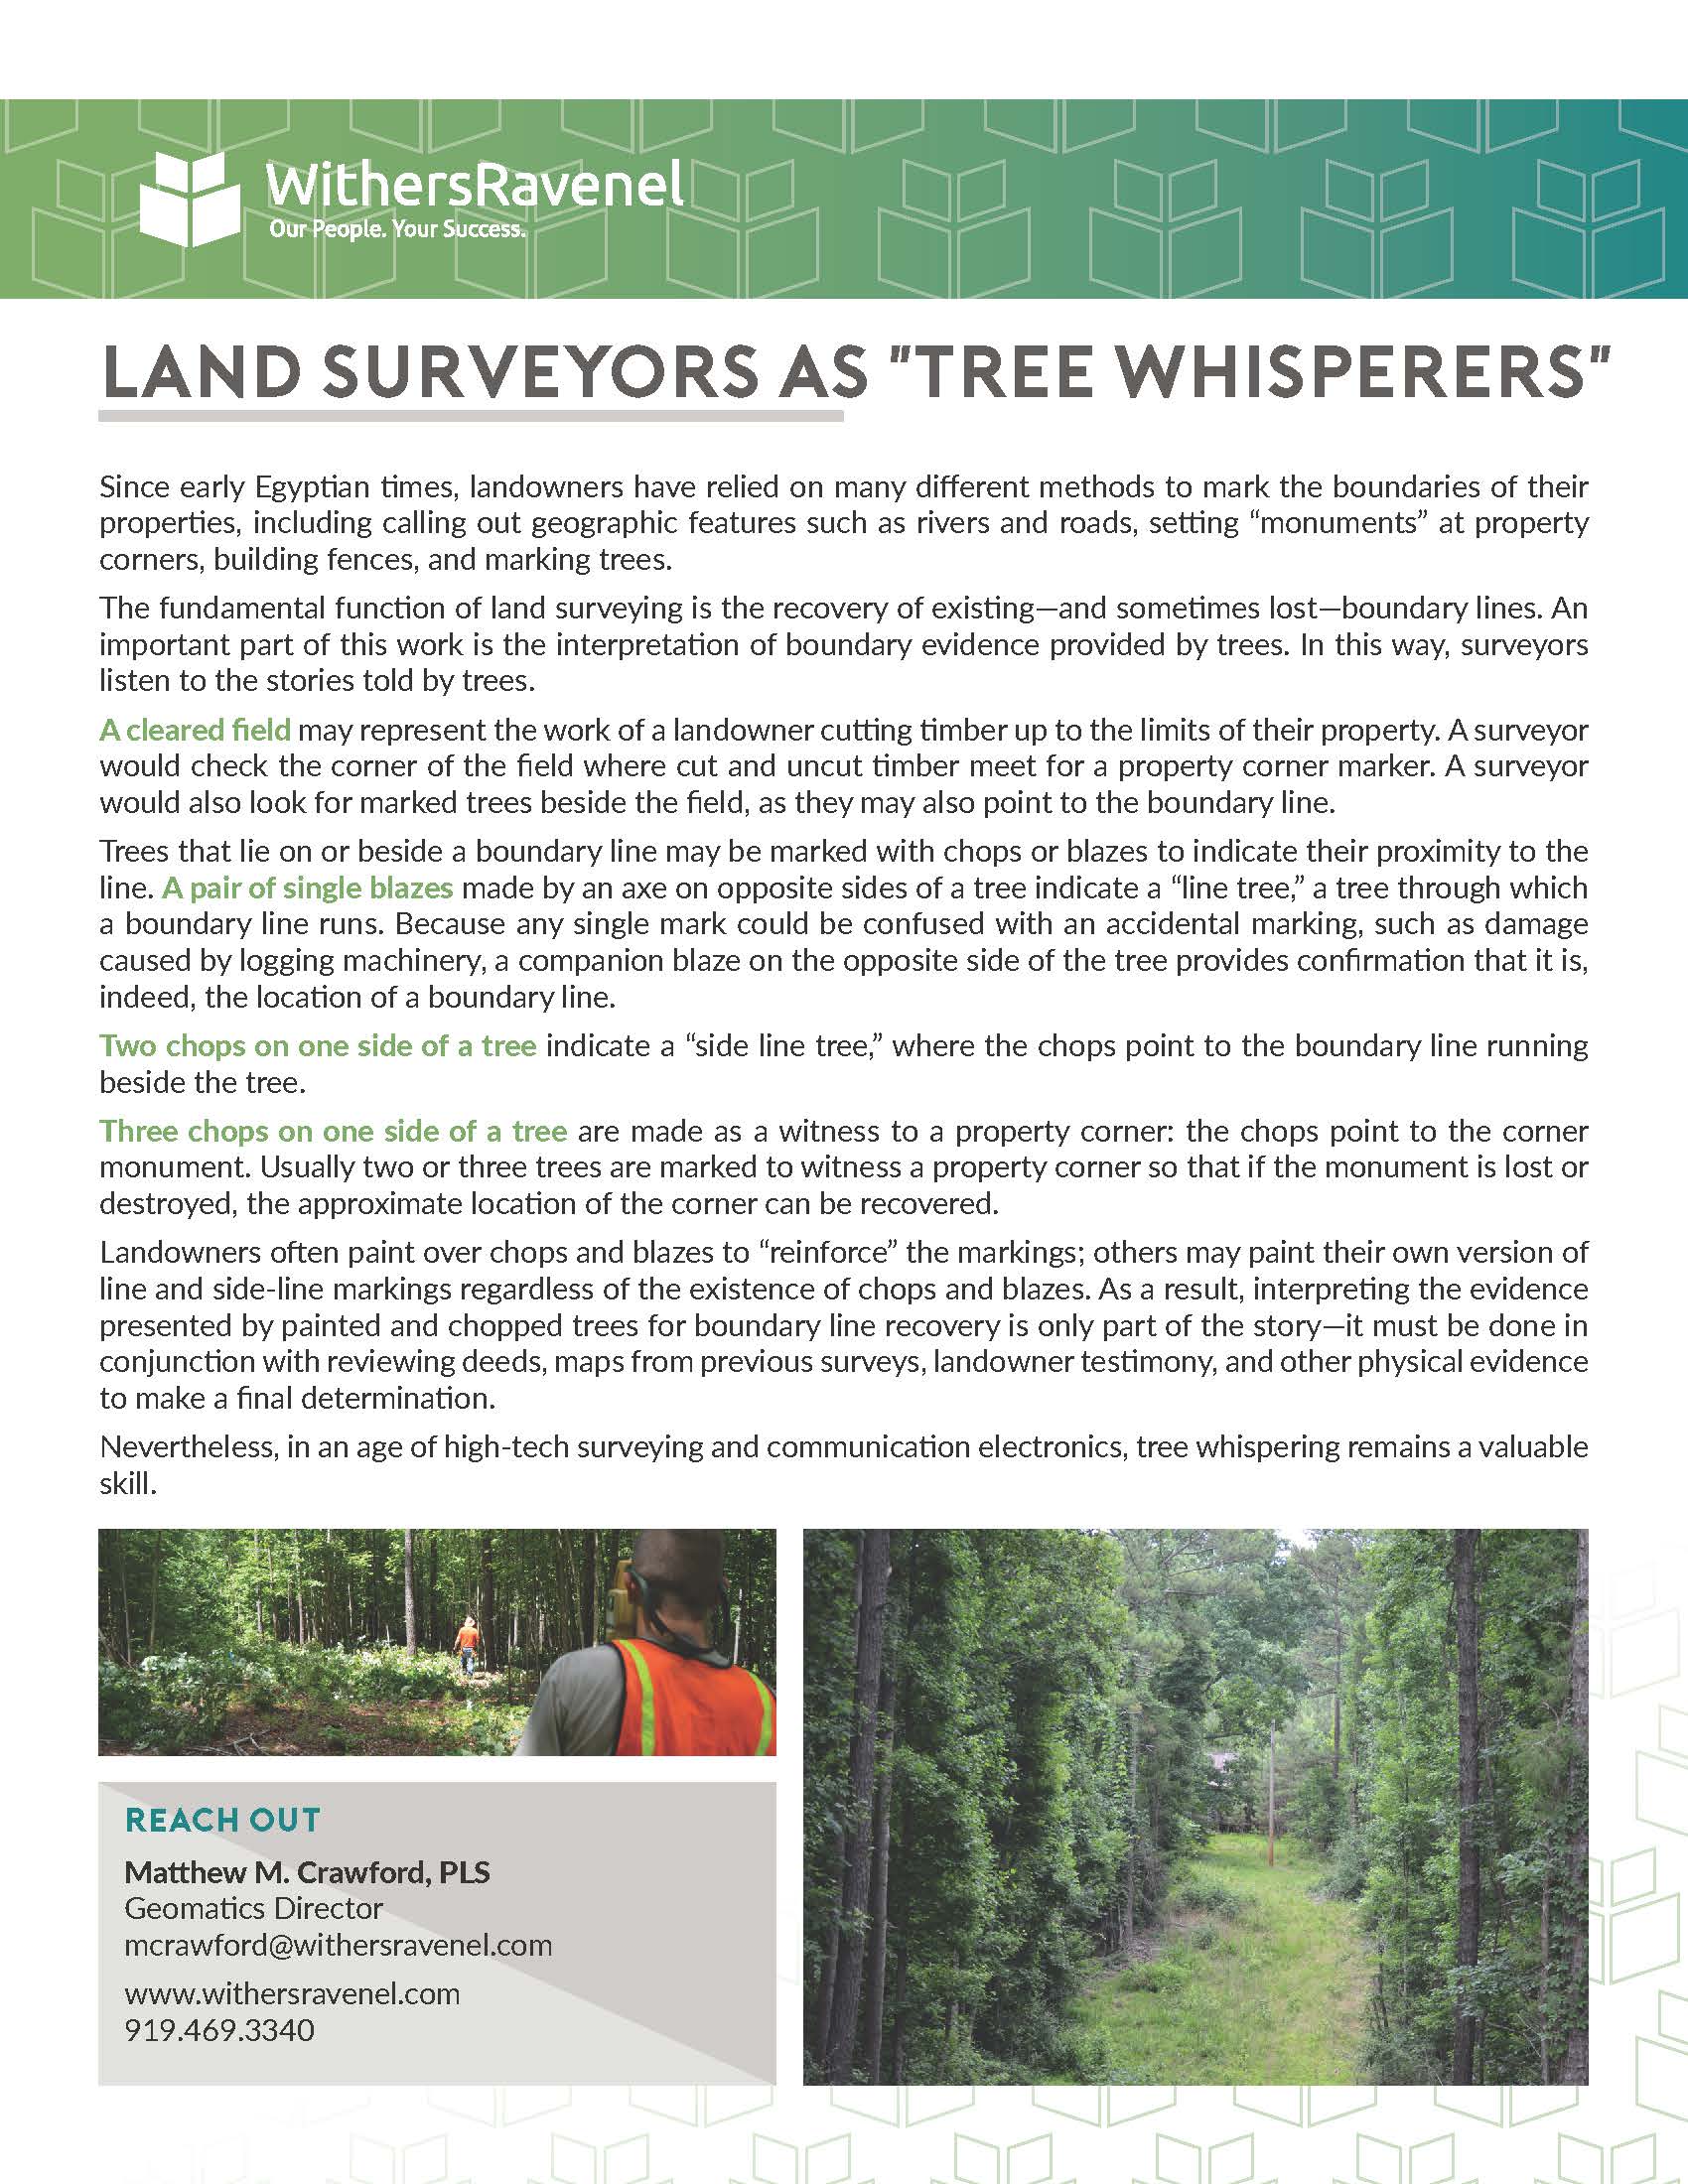 National Surveyors Week: Land Surveyors as &#8220;Tree Whisperers&#8221;